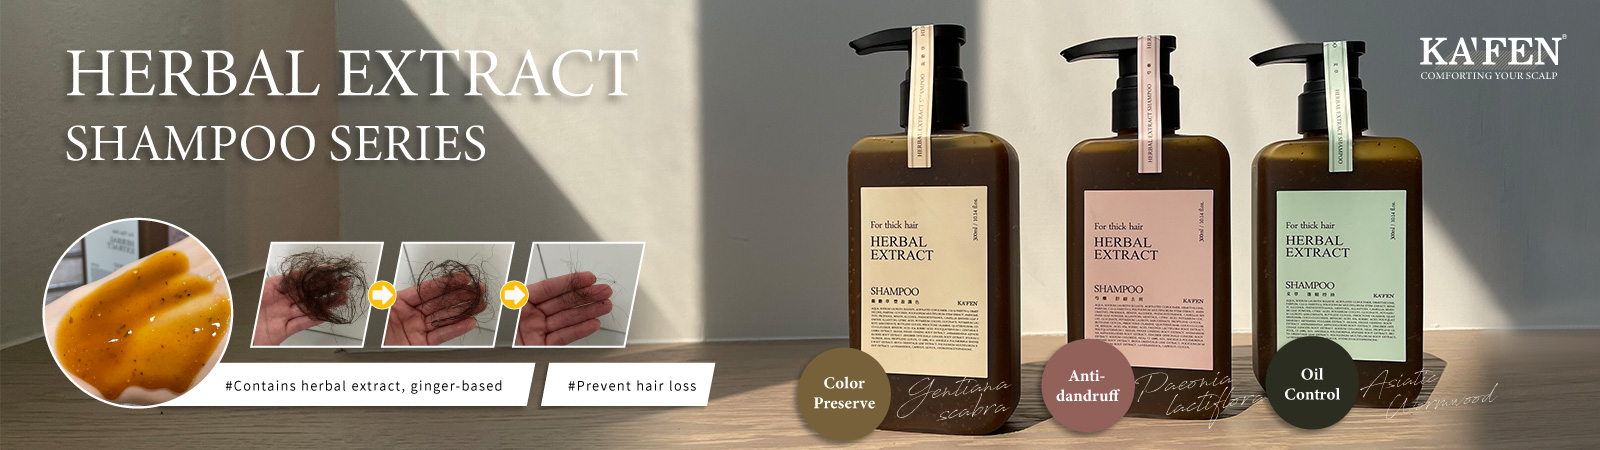 KA’FEN Herbal Extract Shampoo